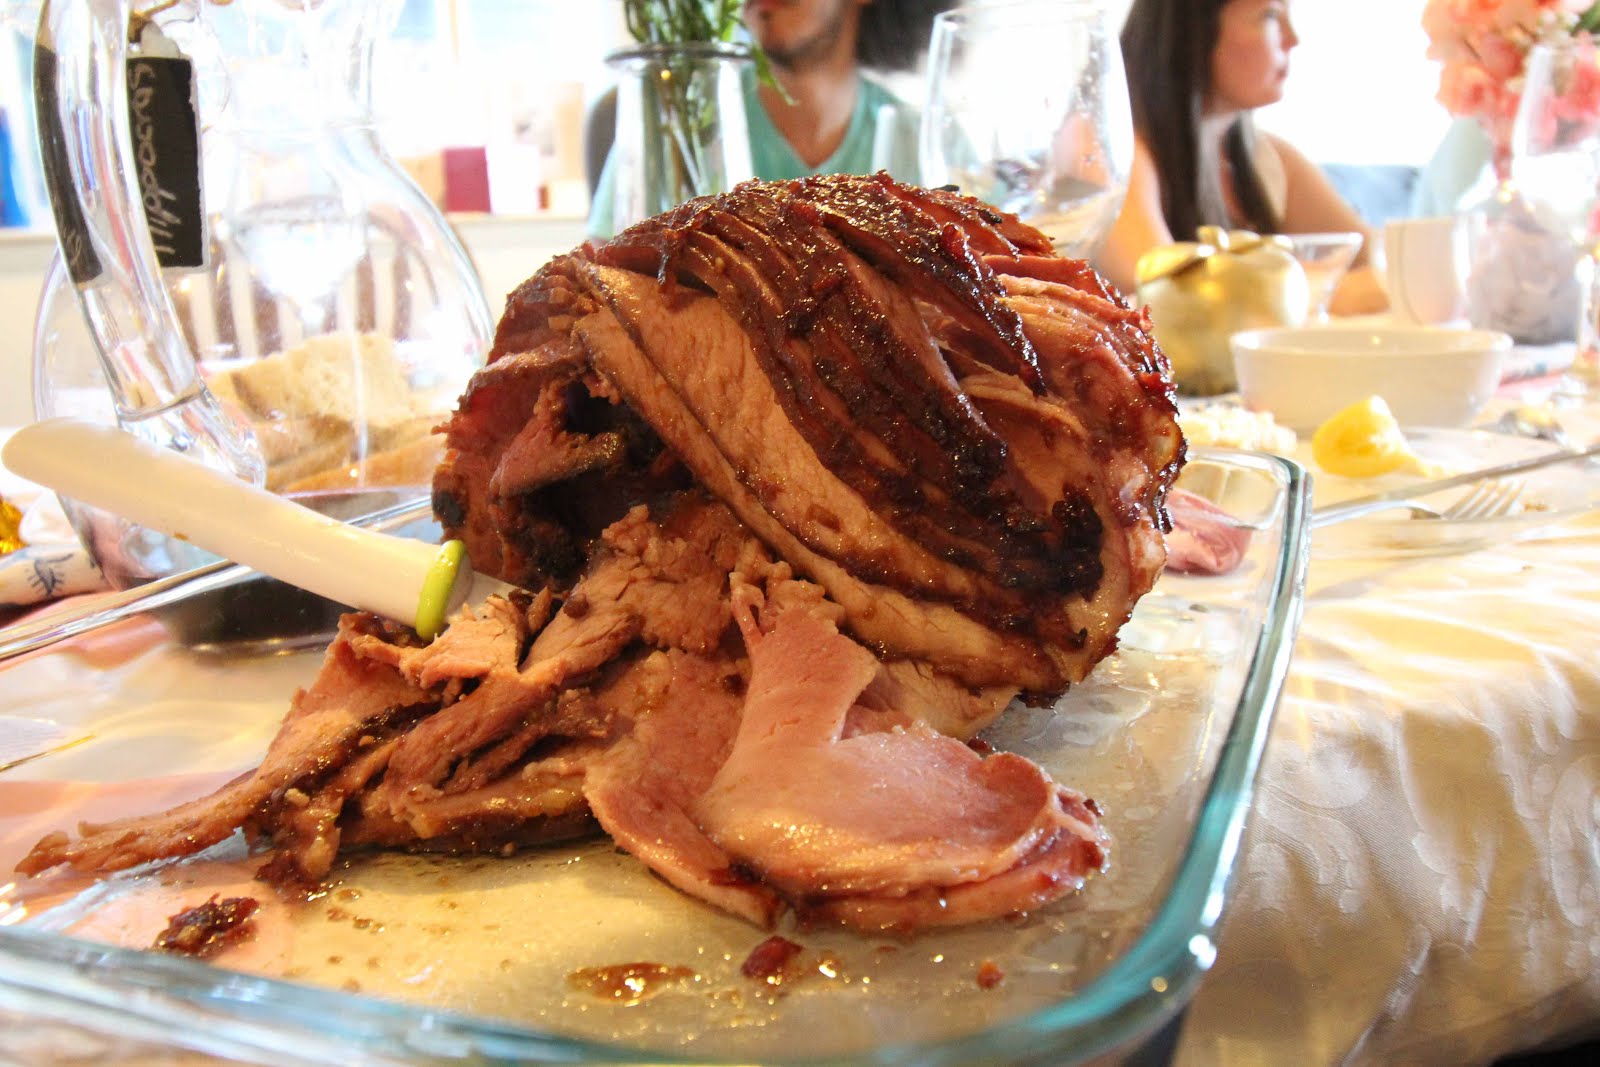 Immense hams: Ham roast with cherry glaze